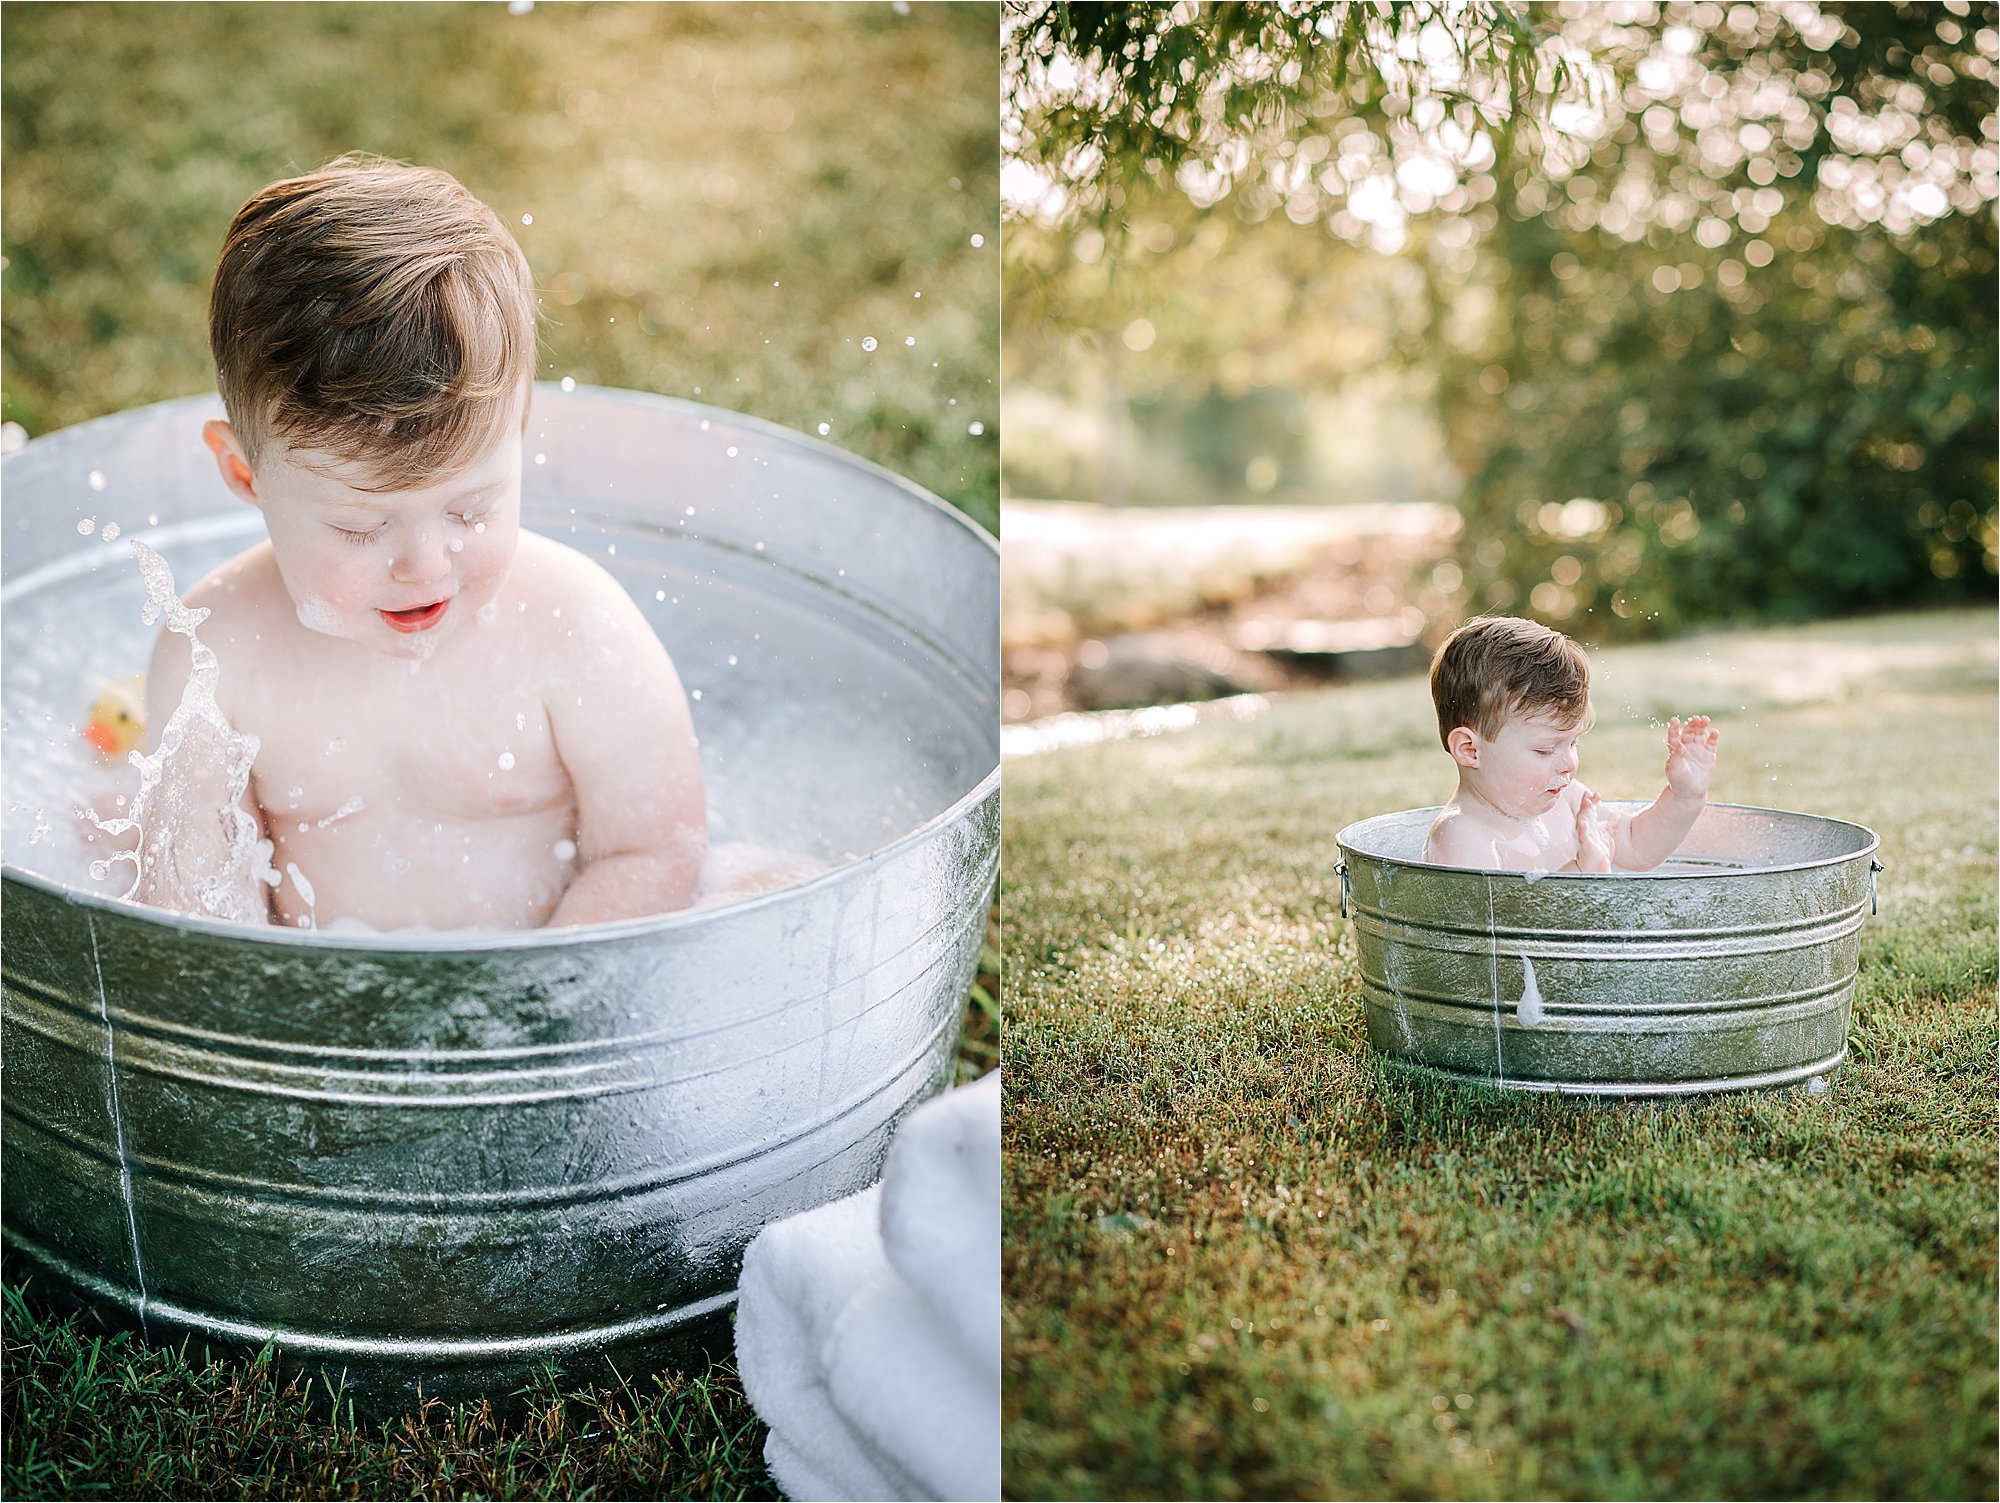 outdoor bubble bath photo session